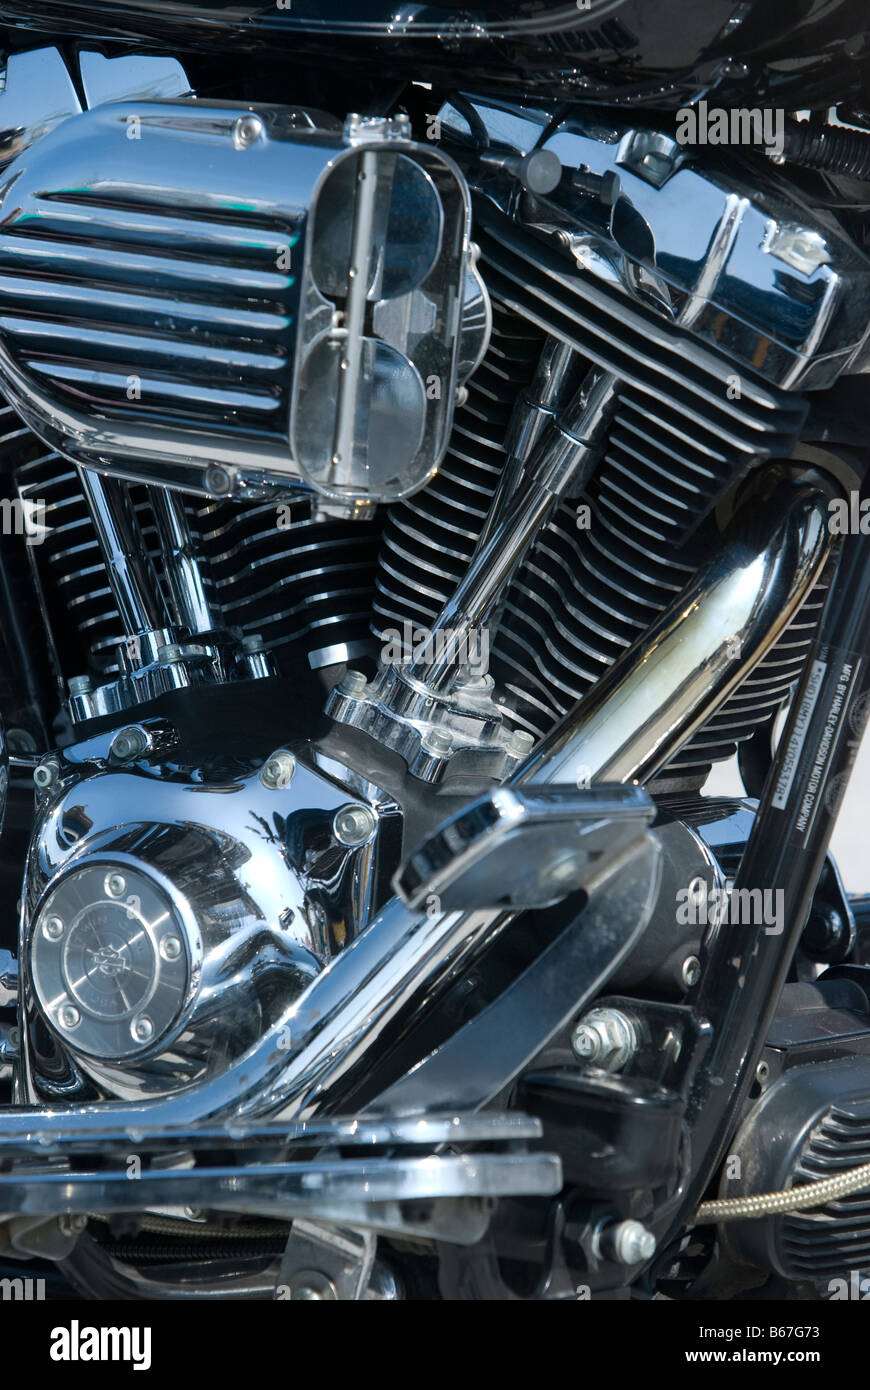 Classic V2 moteur de moto Harley Davidson Banque D'Images